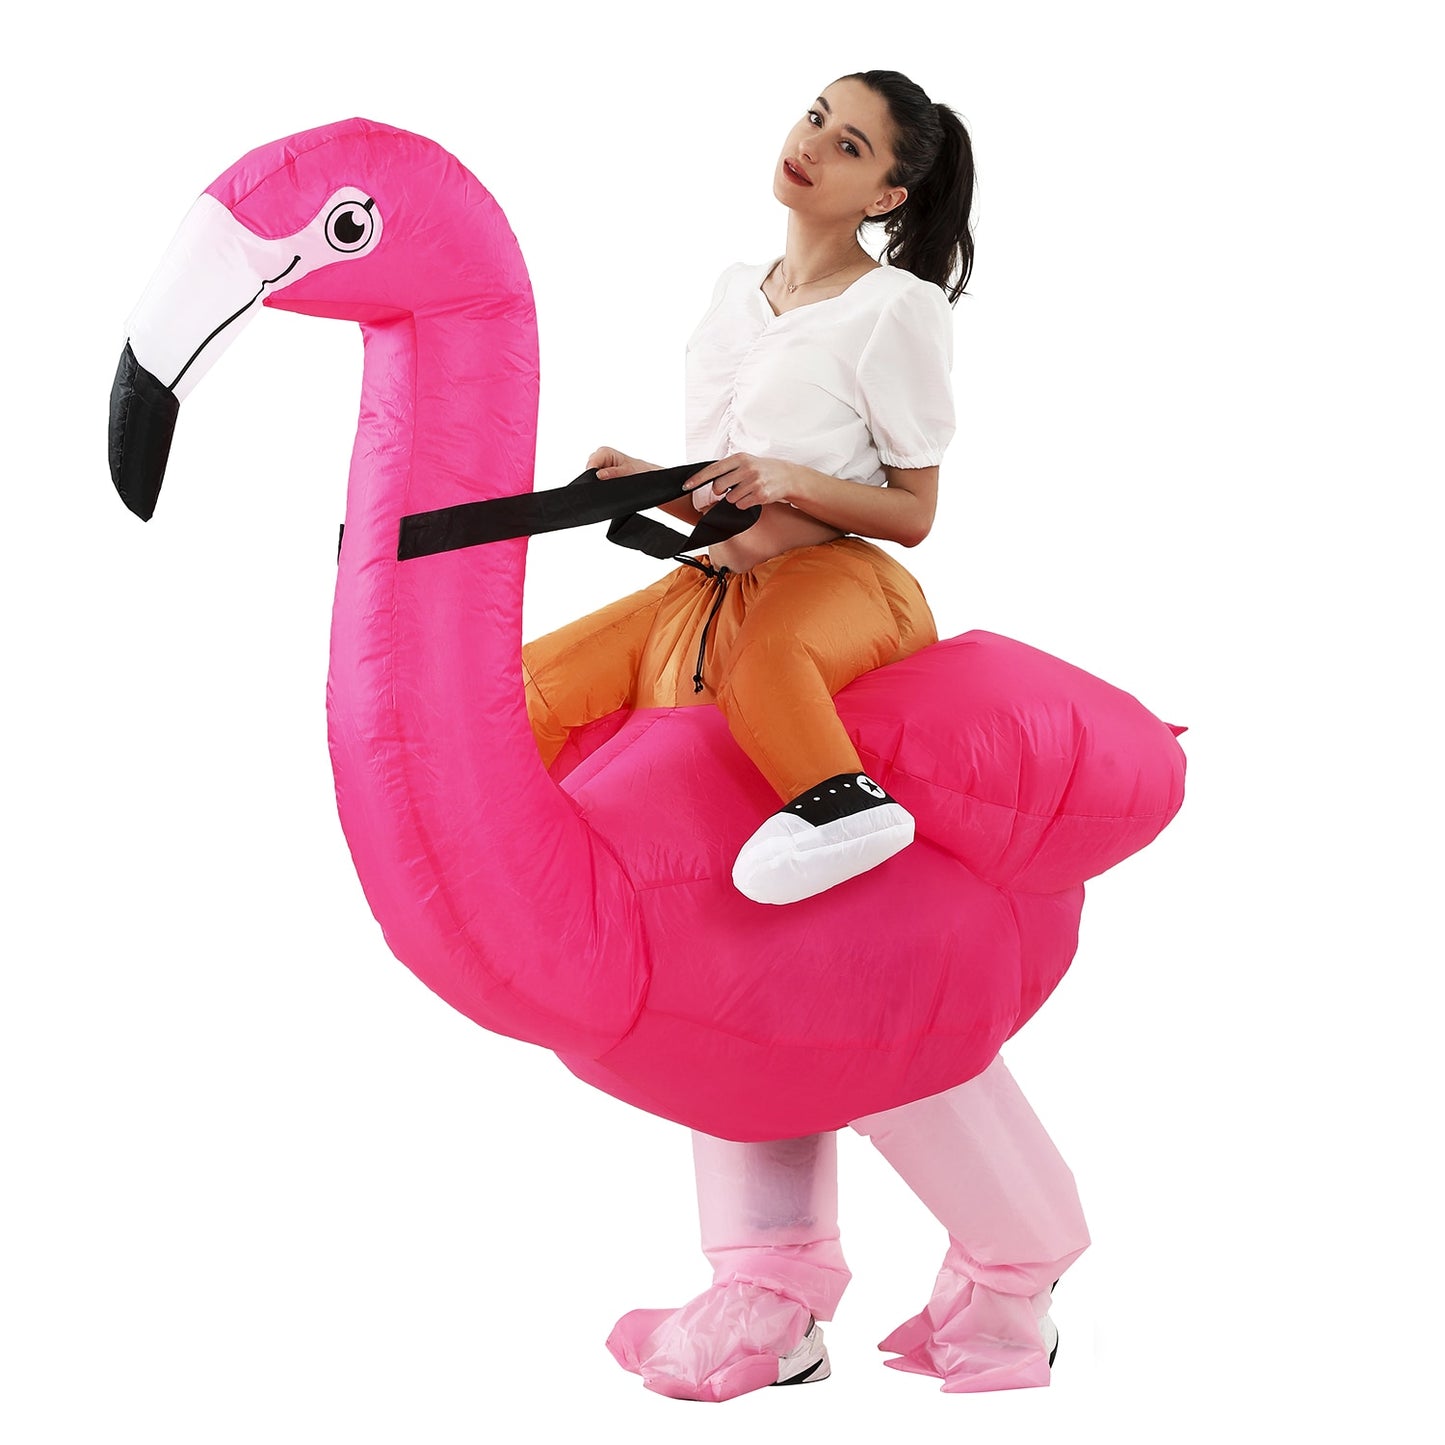 Inflatable Flamingo Costume